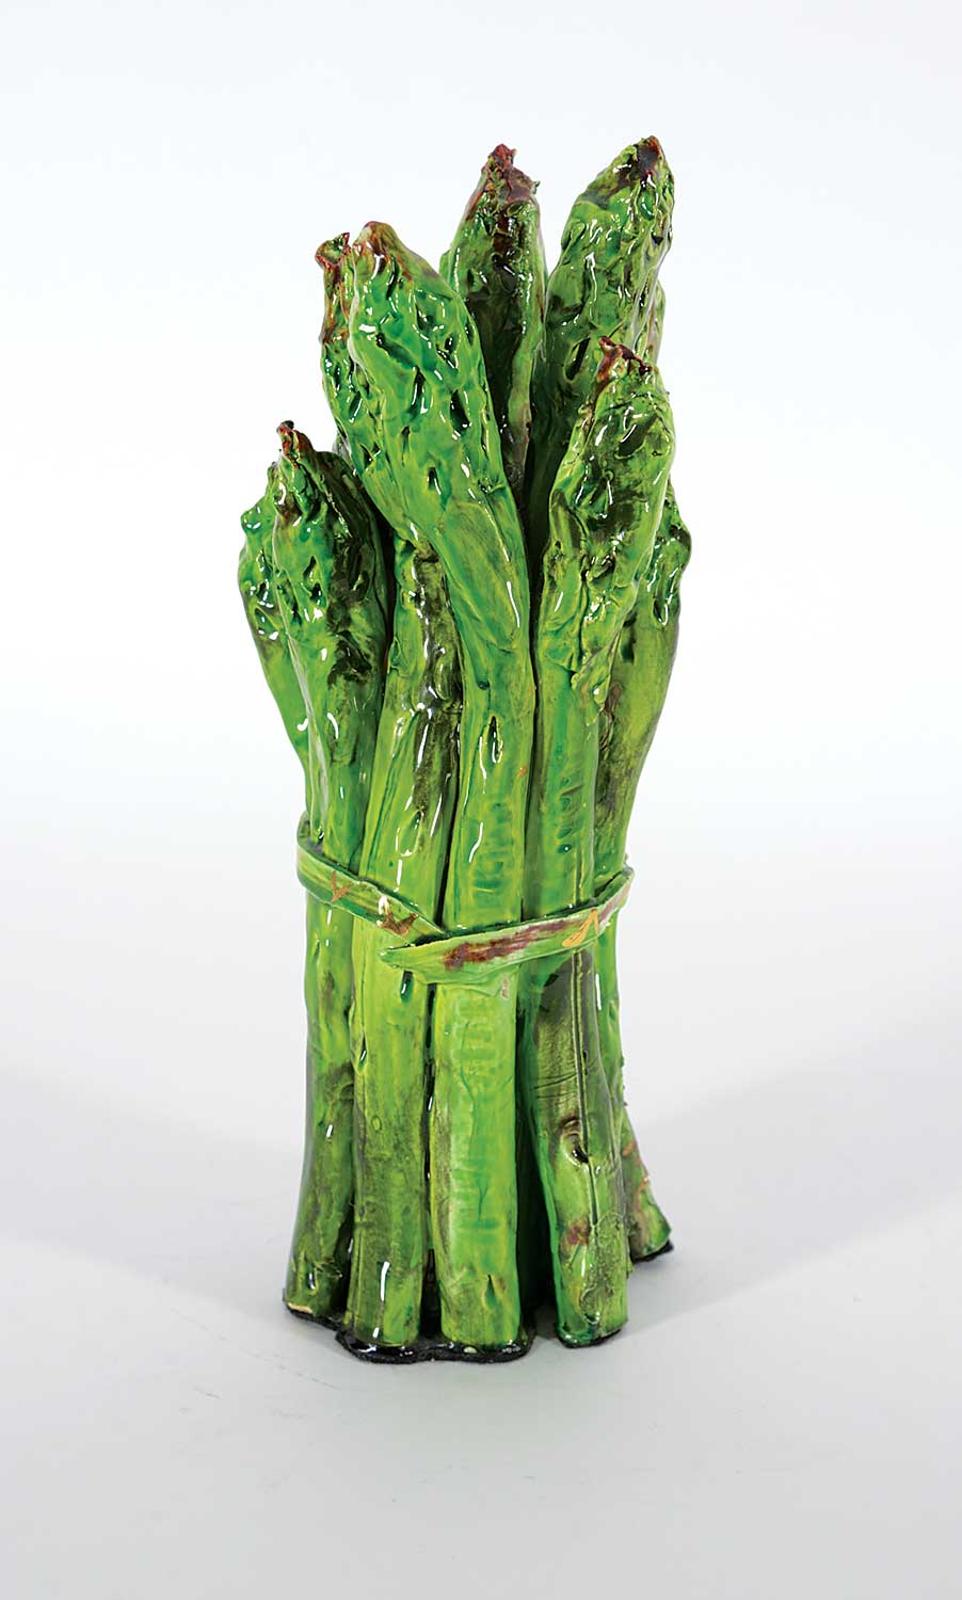 Katherine McLean - Untitled - Asparagus